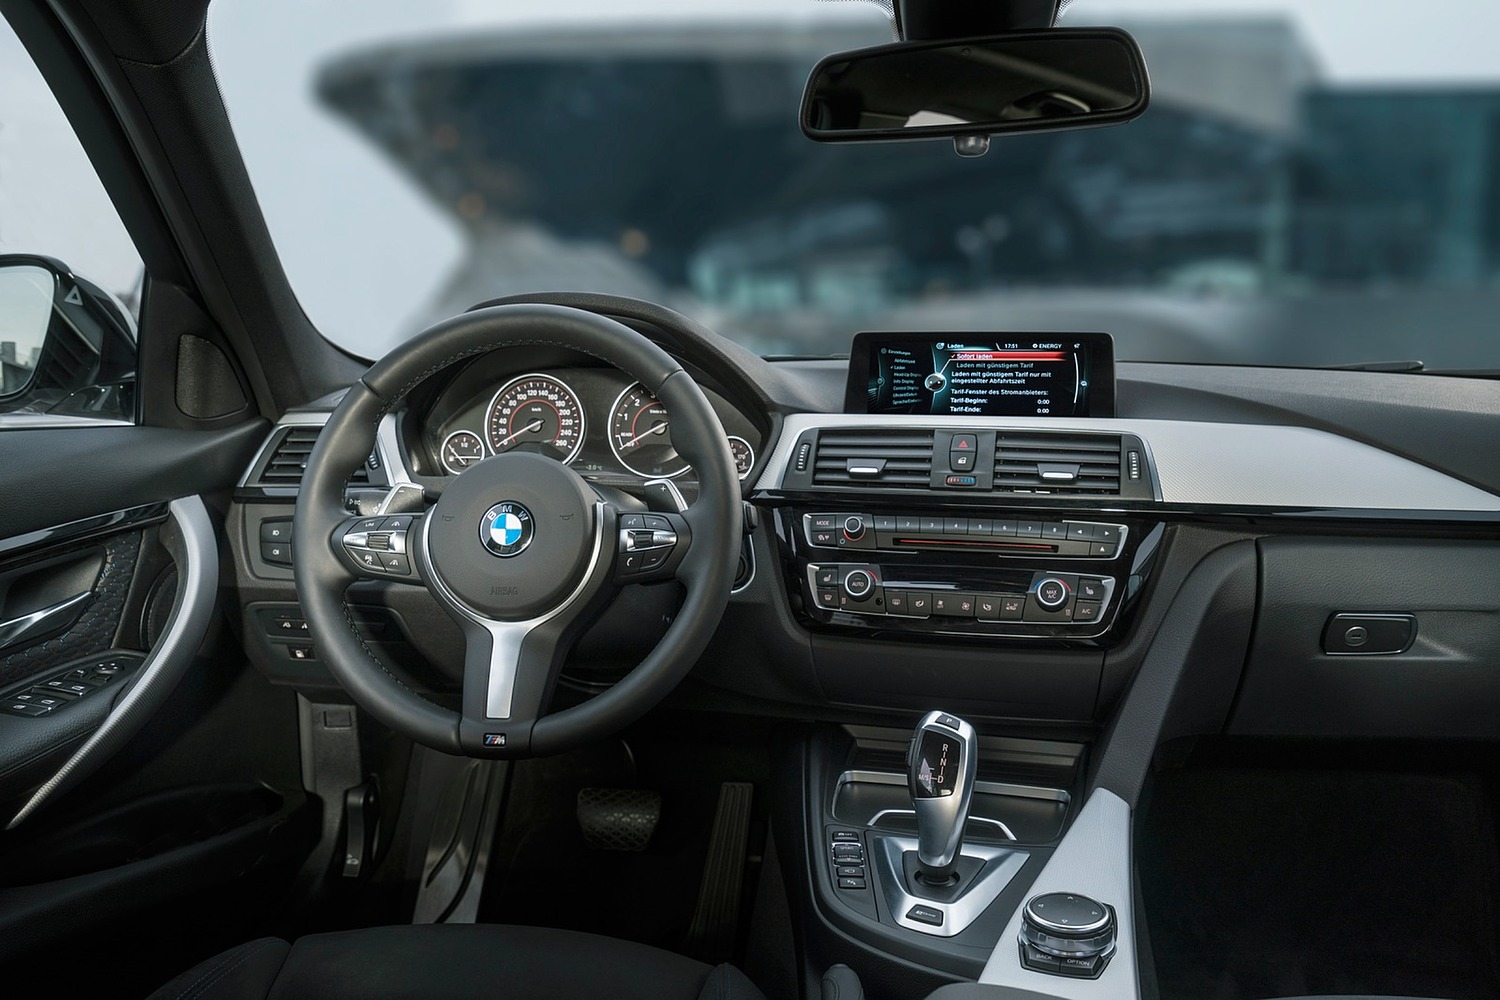 BMW 3 Series 330e iPerformance Sedan Dashboard (2017 model year shown)